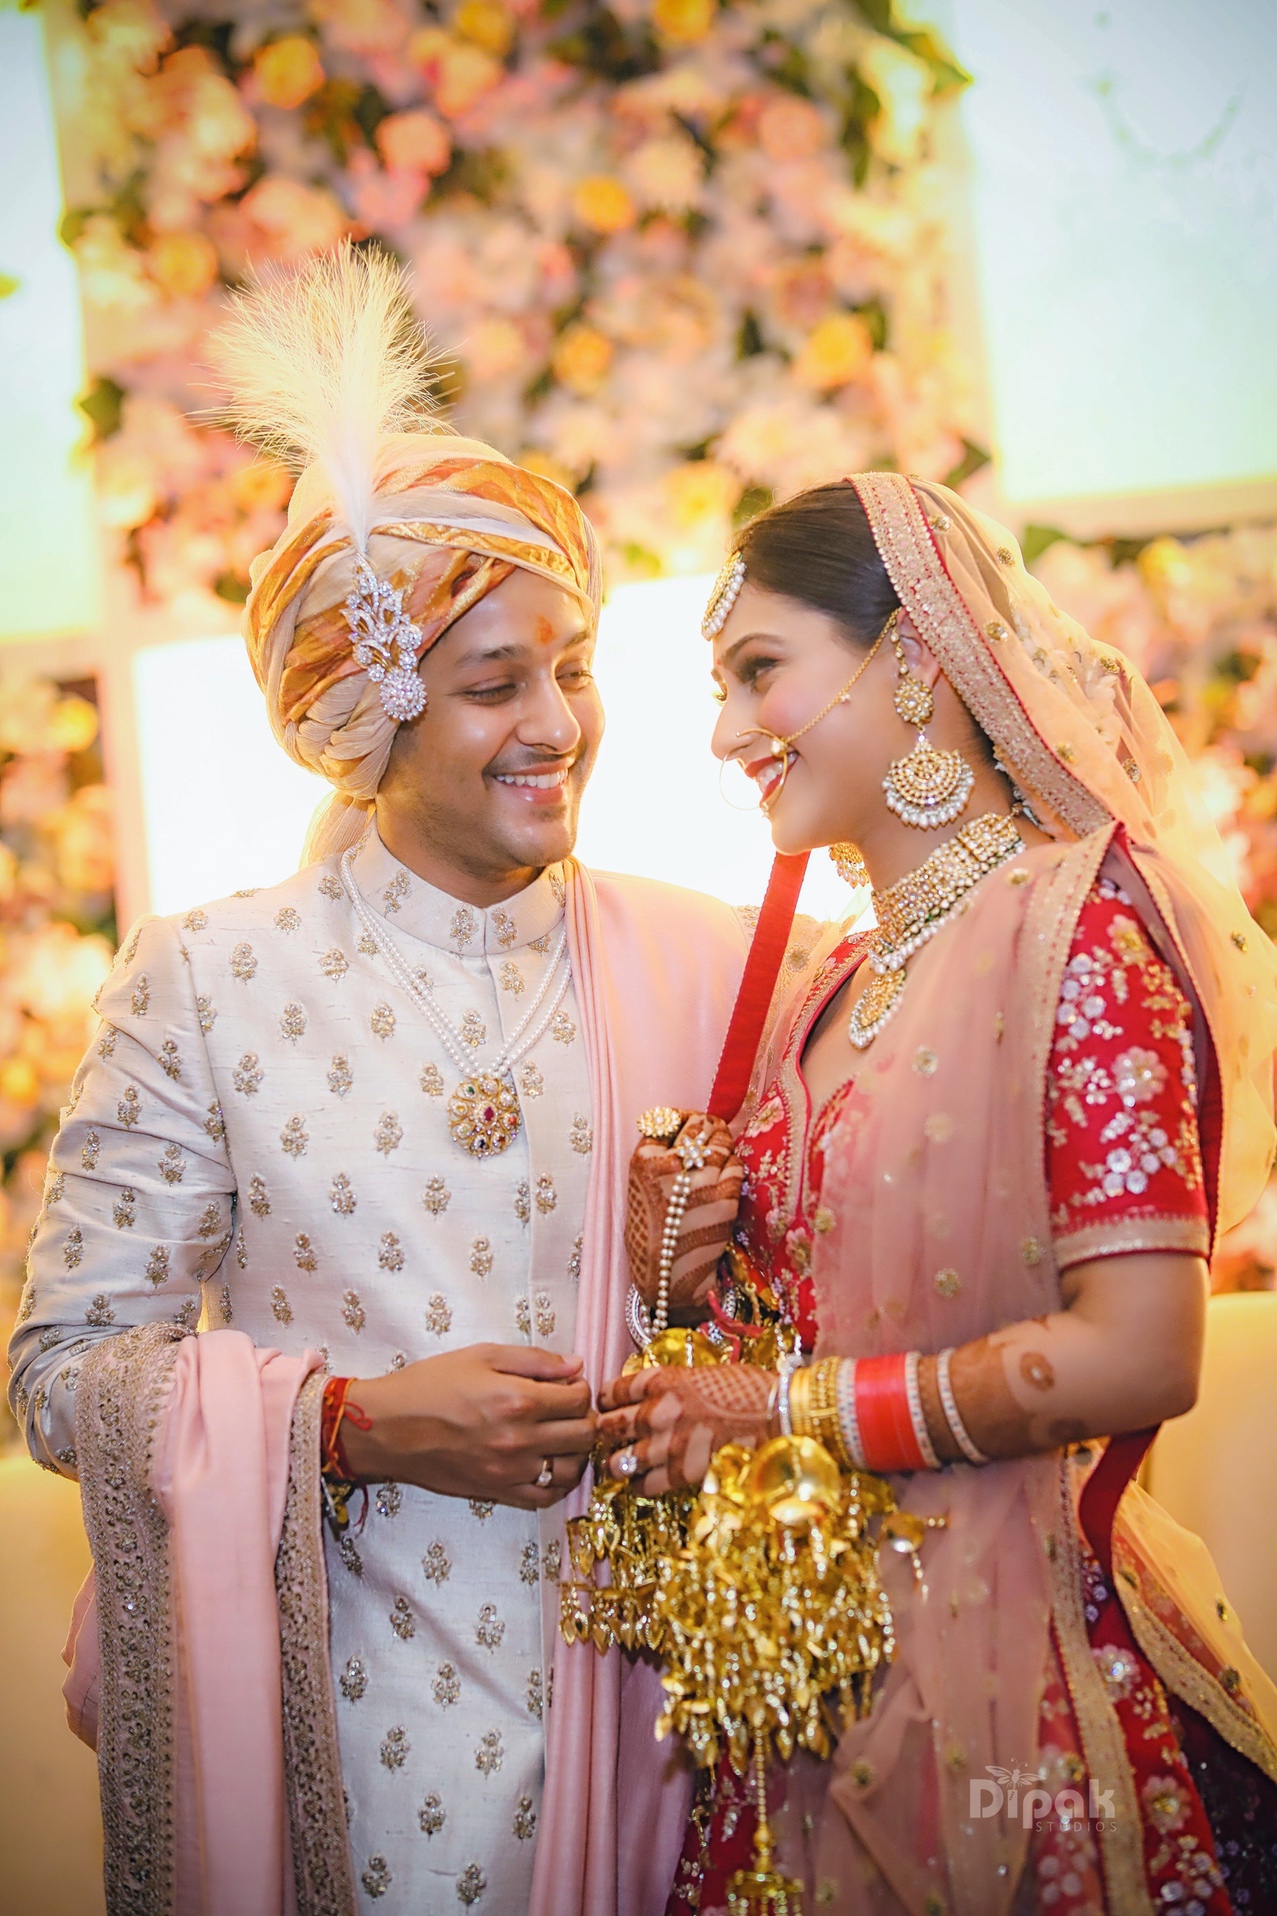 Indian wedding Couple Photography | Couples of Dipak ...